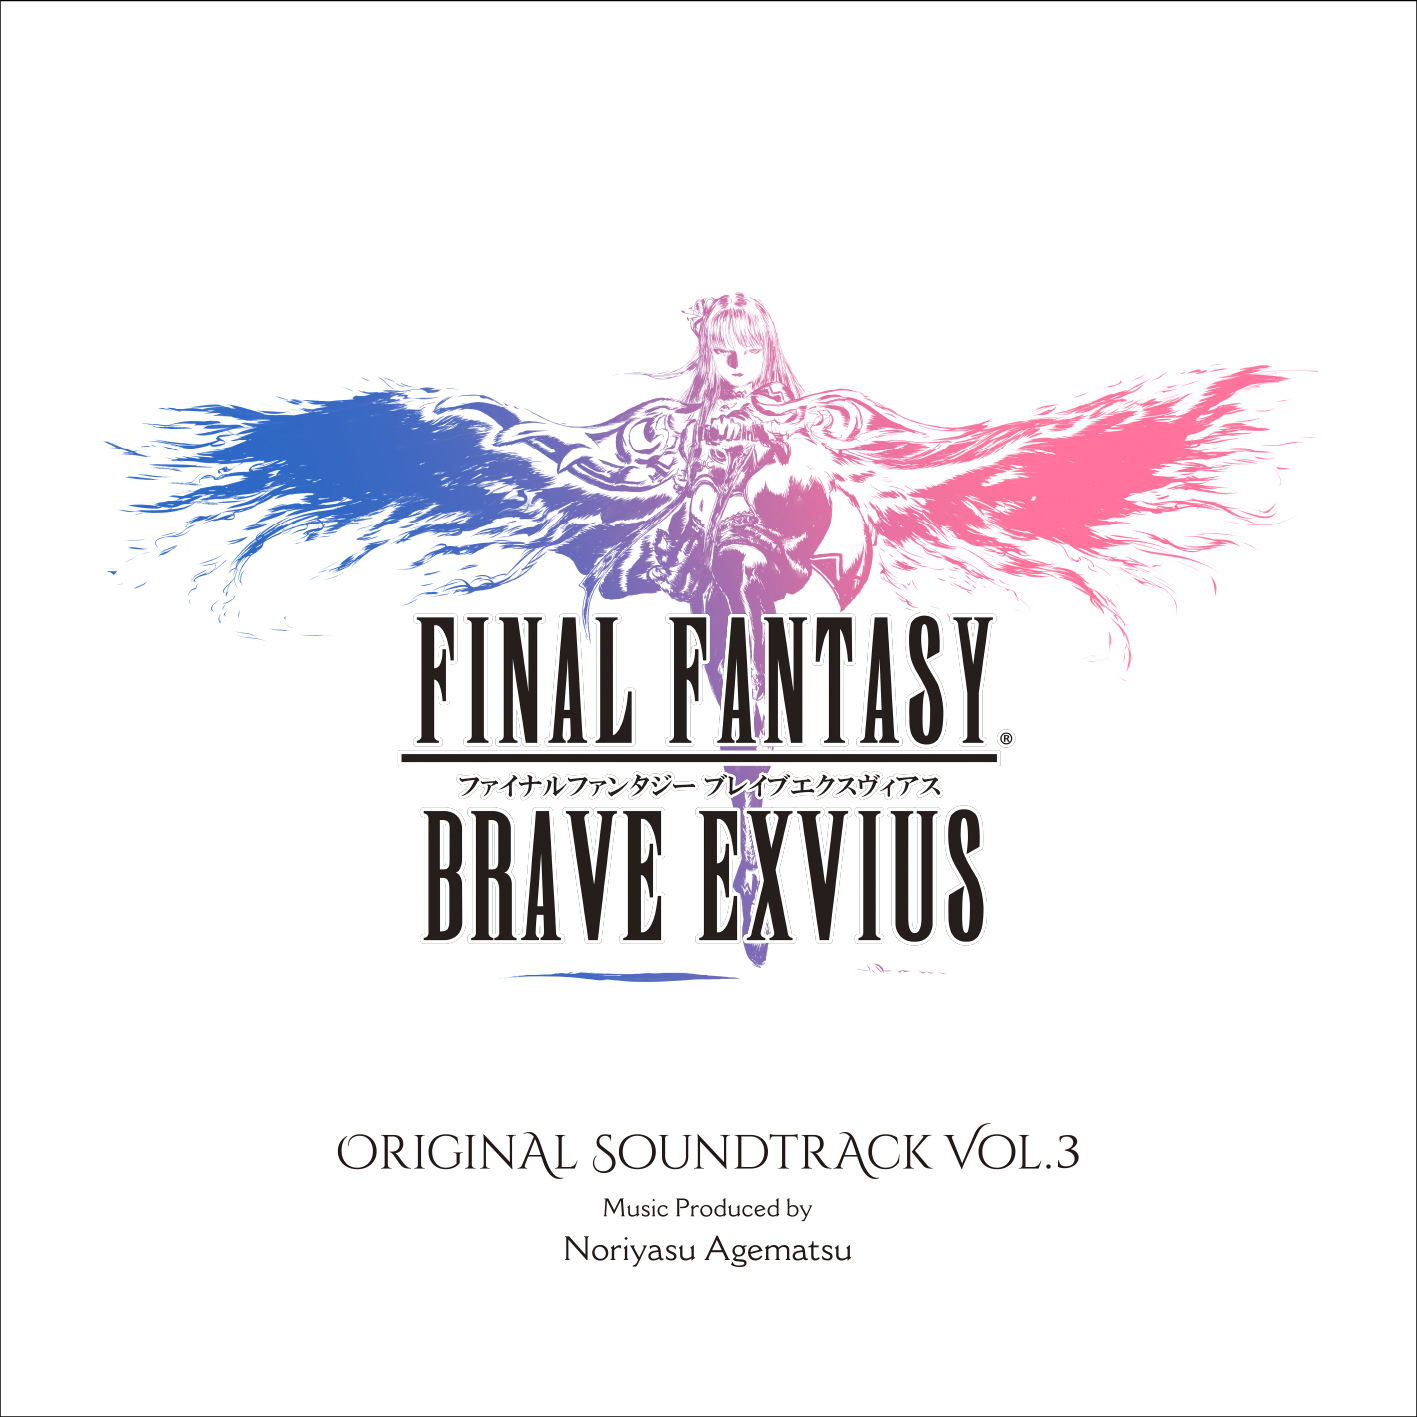 Final Fantasy Brave Exvius Original Soundtrack Vol 3 本日 パッケージ版の発売並びに音源のダウンロード版配信開始 ニュース ファイナルファンタジーポータルサイト Square Enix